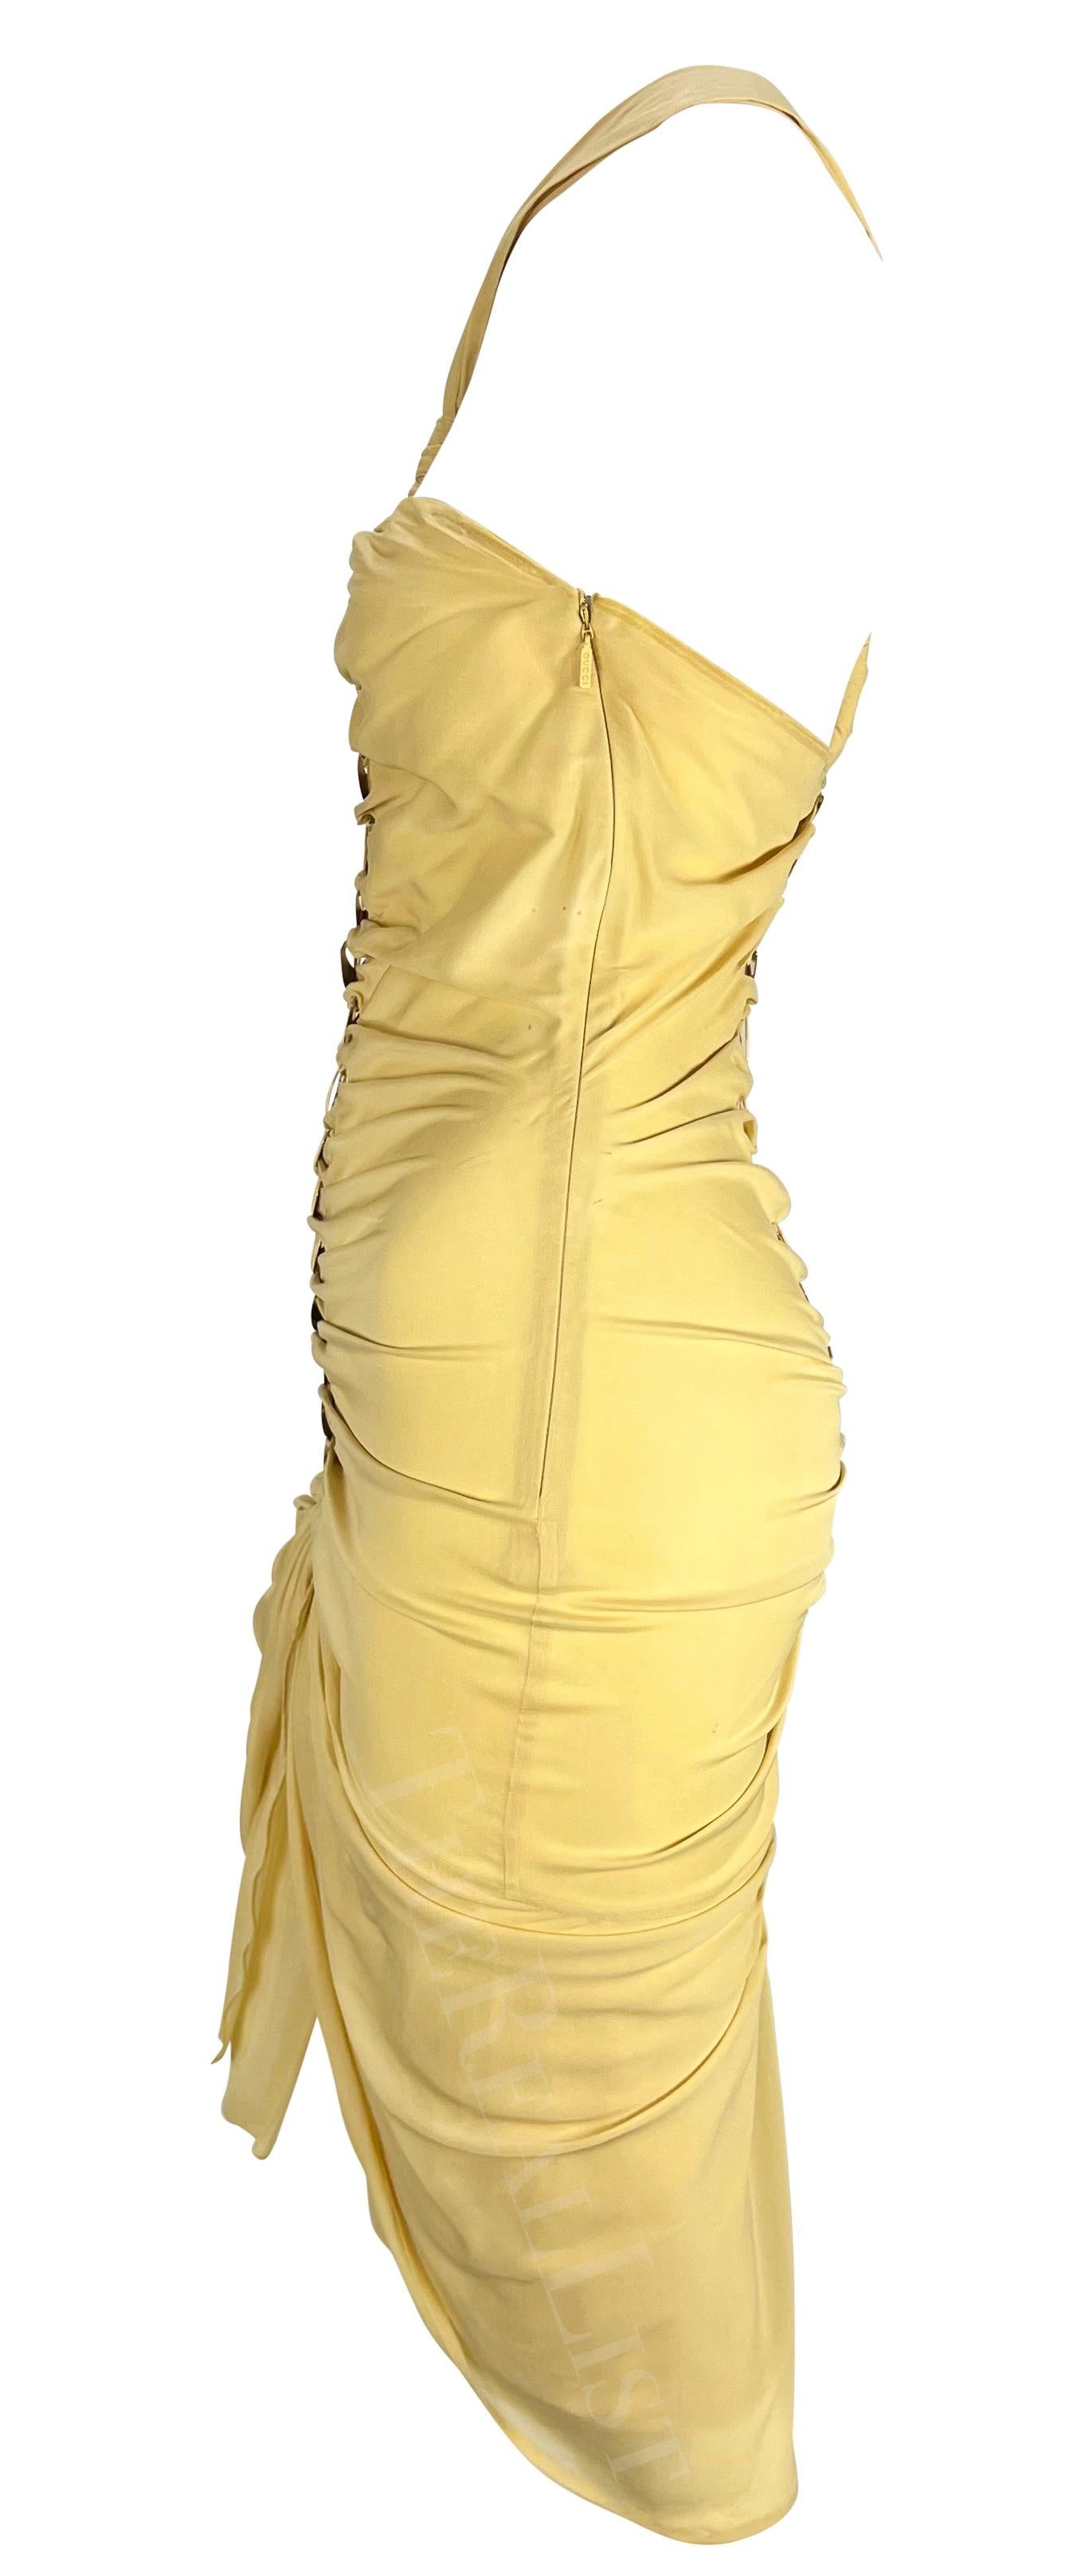 S/S 2005 Gucci Beige Cutout Gold-Tone Metal Spine Bodycon Mini Dress For Sale 1